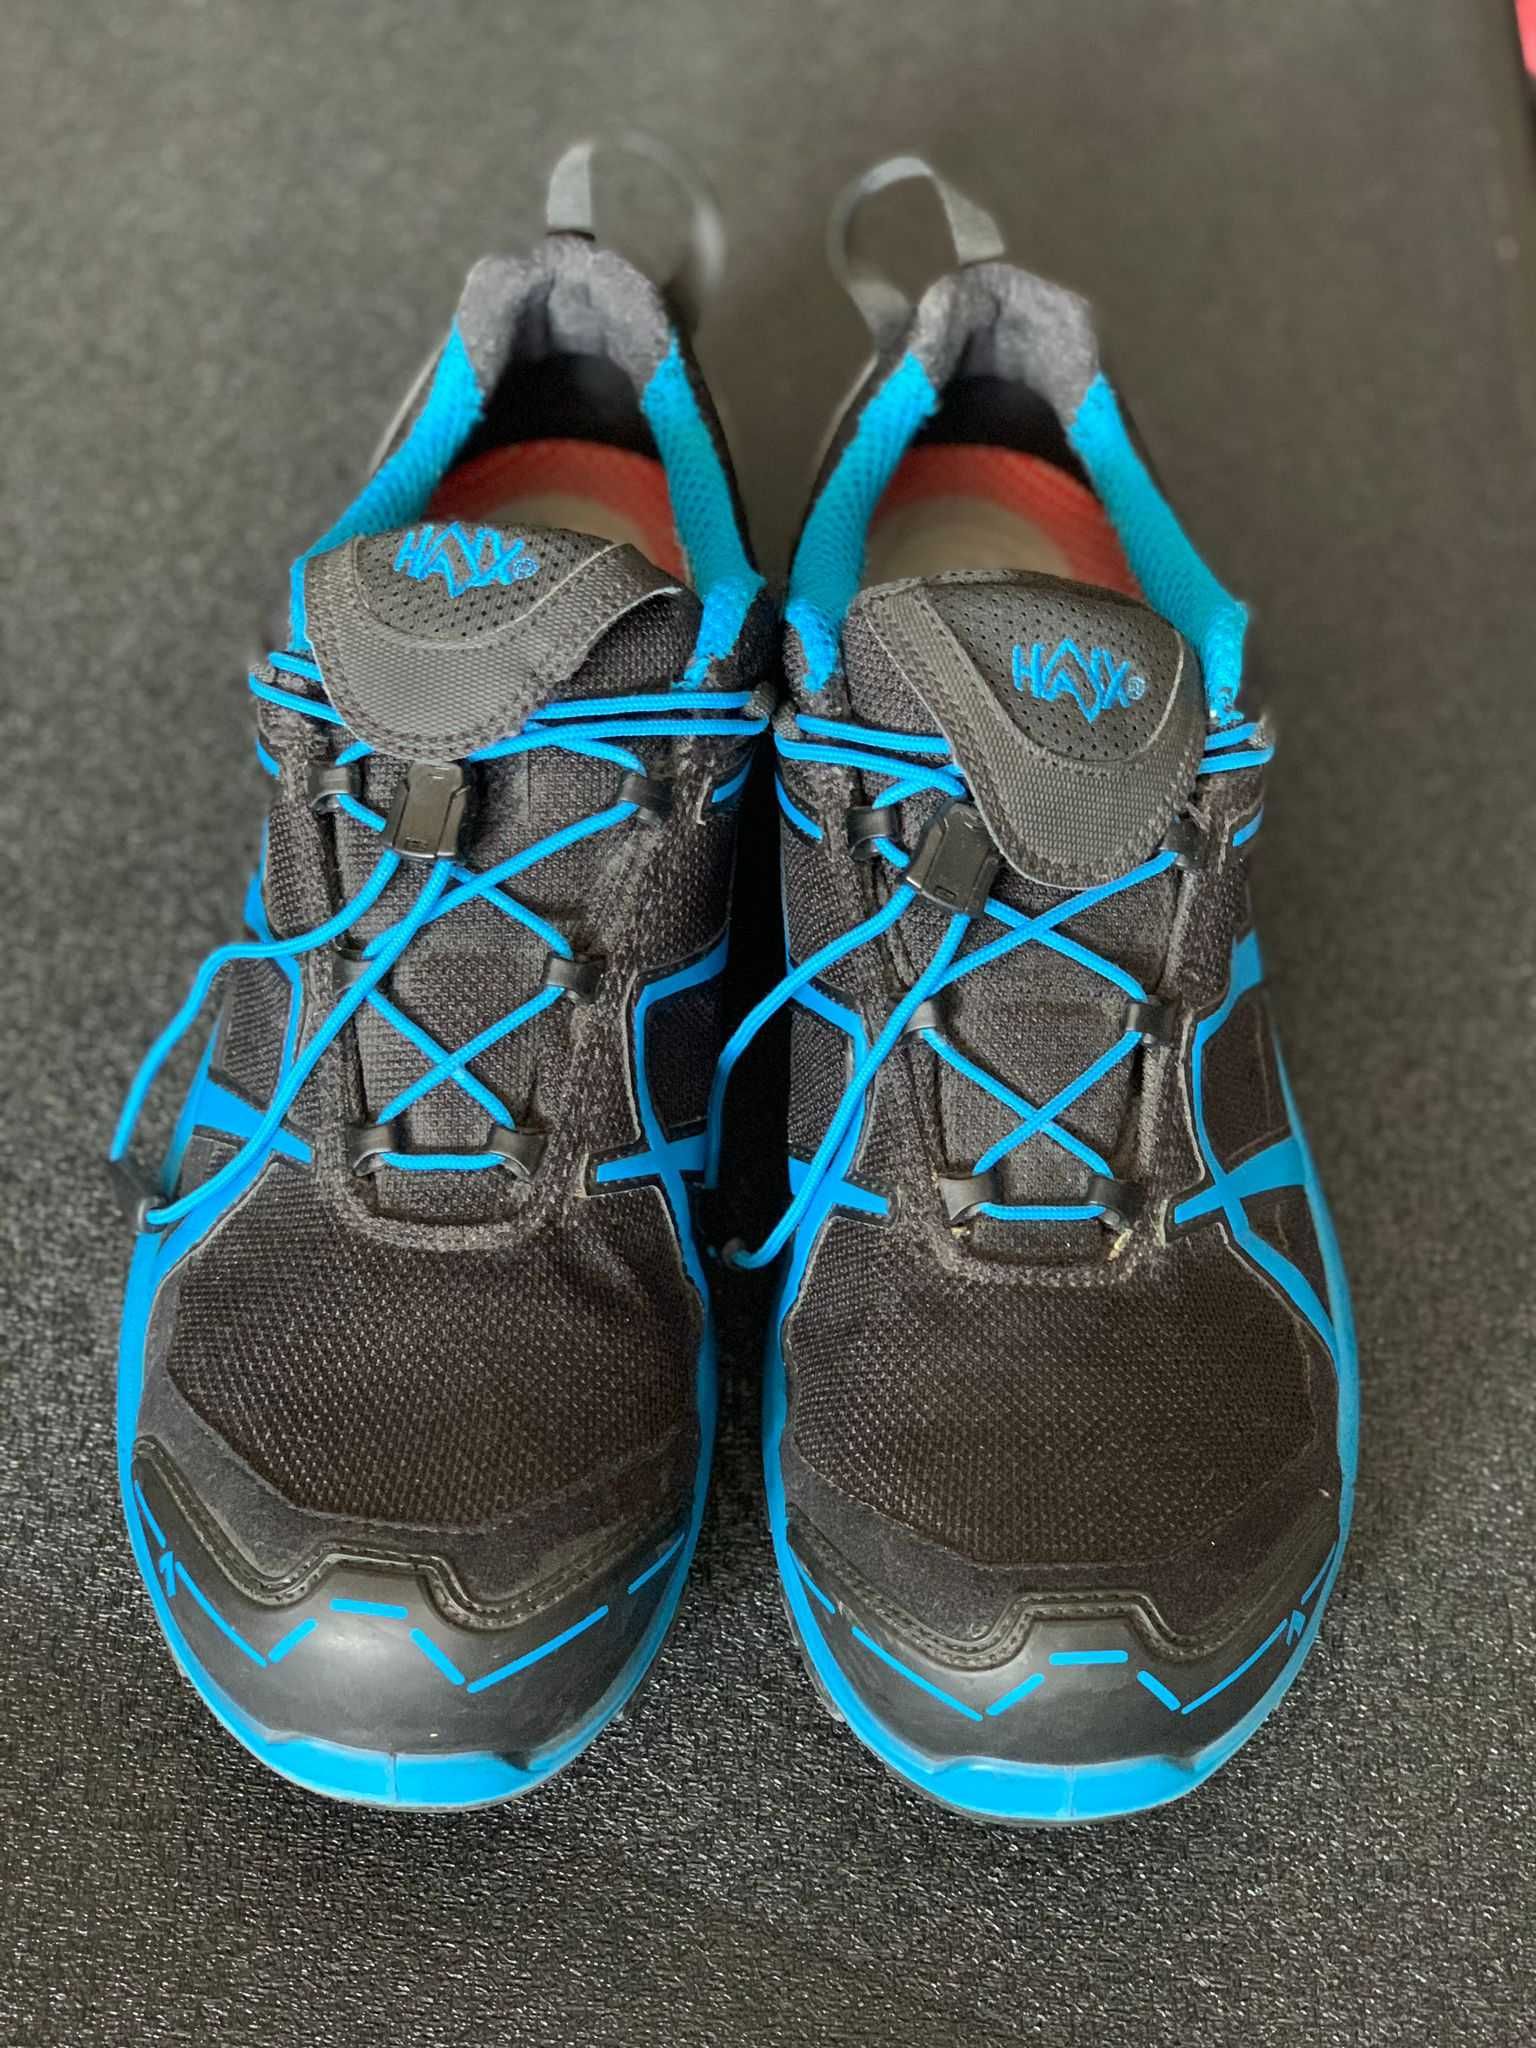 Pantofi de protectie de inalta calitate Haix. Marimea 42